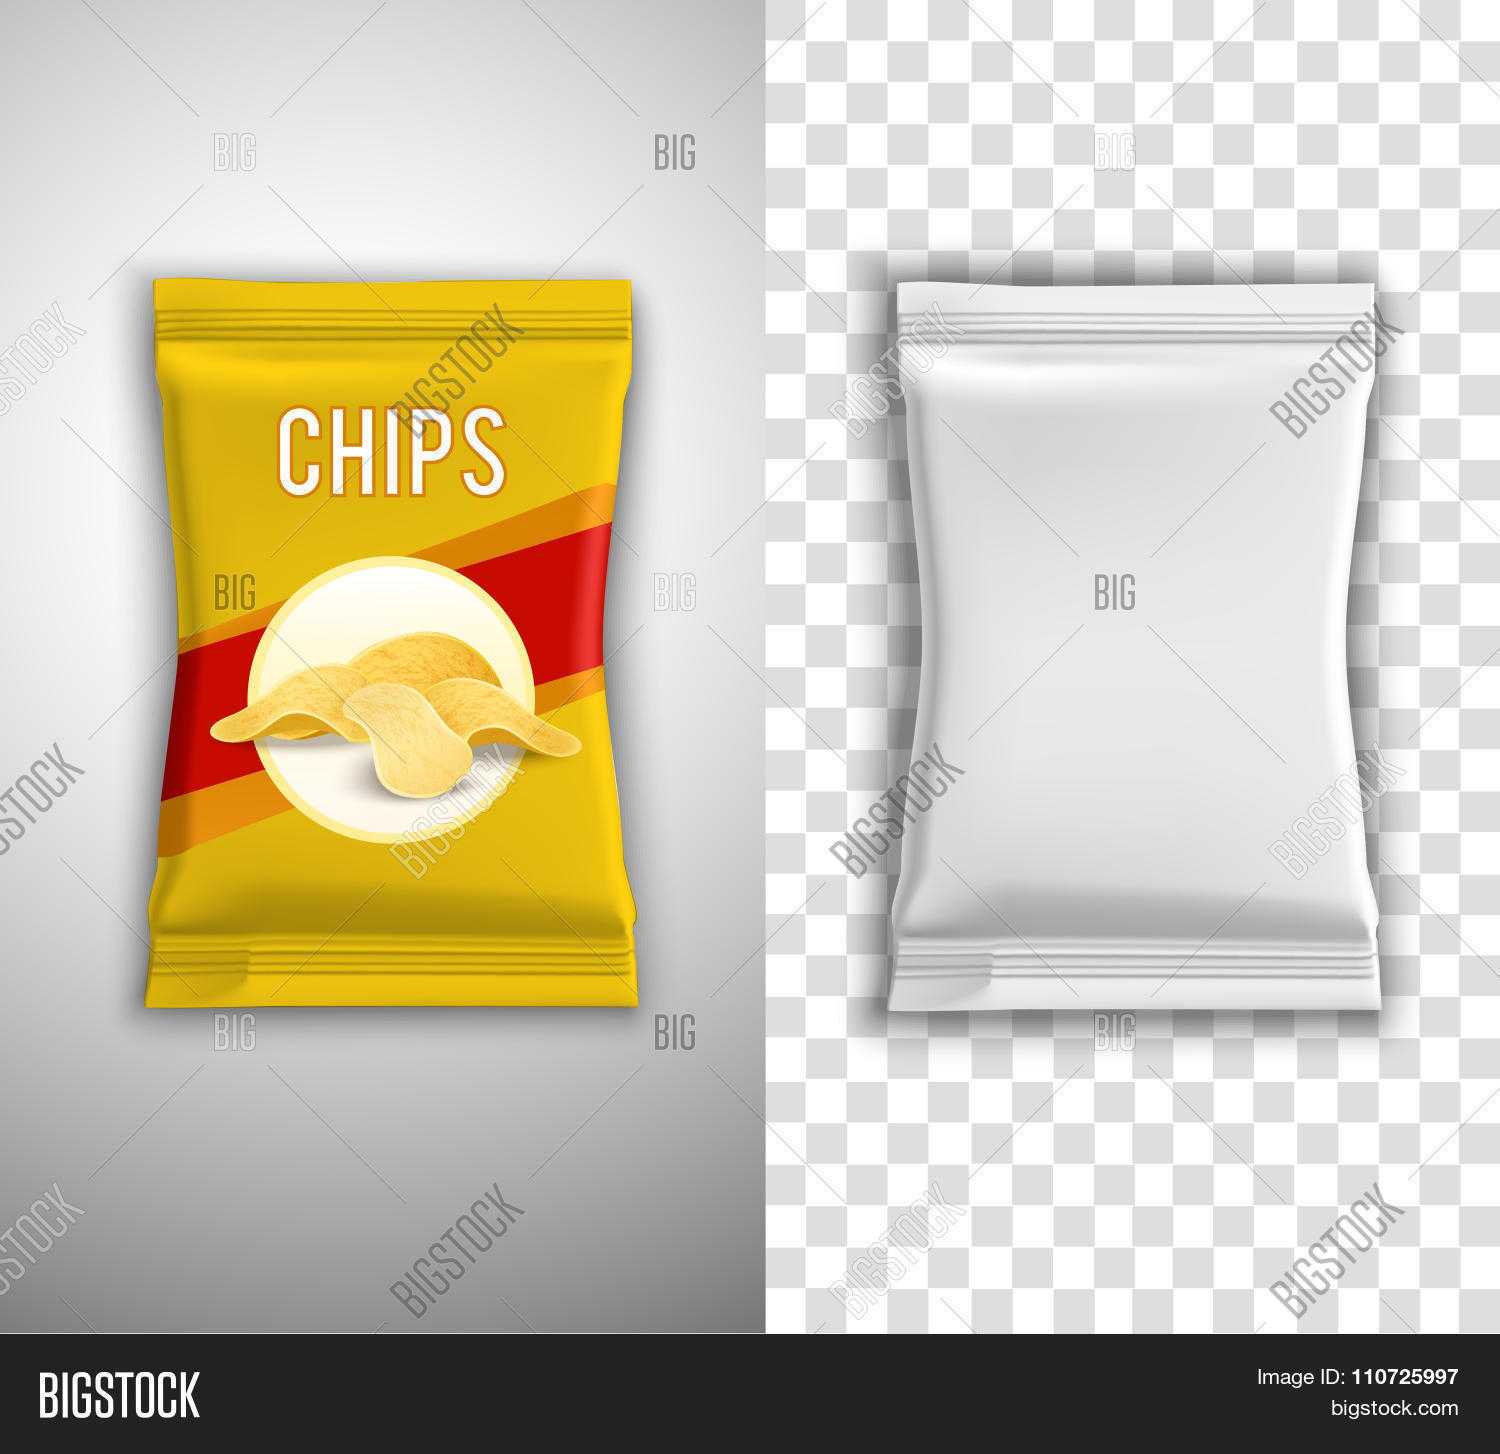 Chips Packaging Vector & Photo (Free Trial) | Bigstock Regarding Blank Packaging Templates